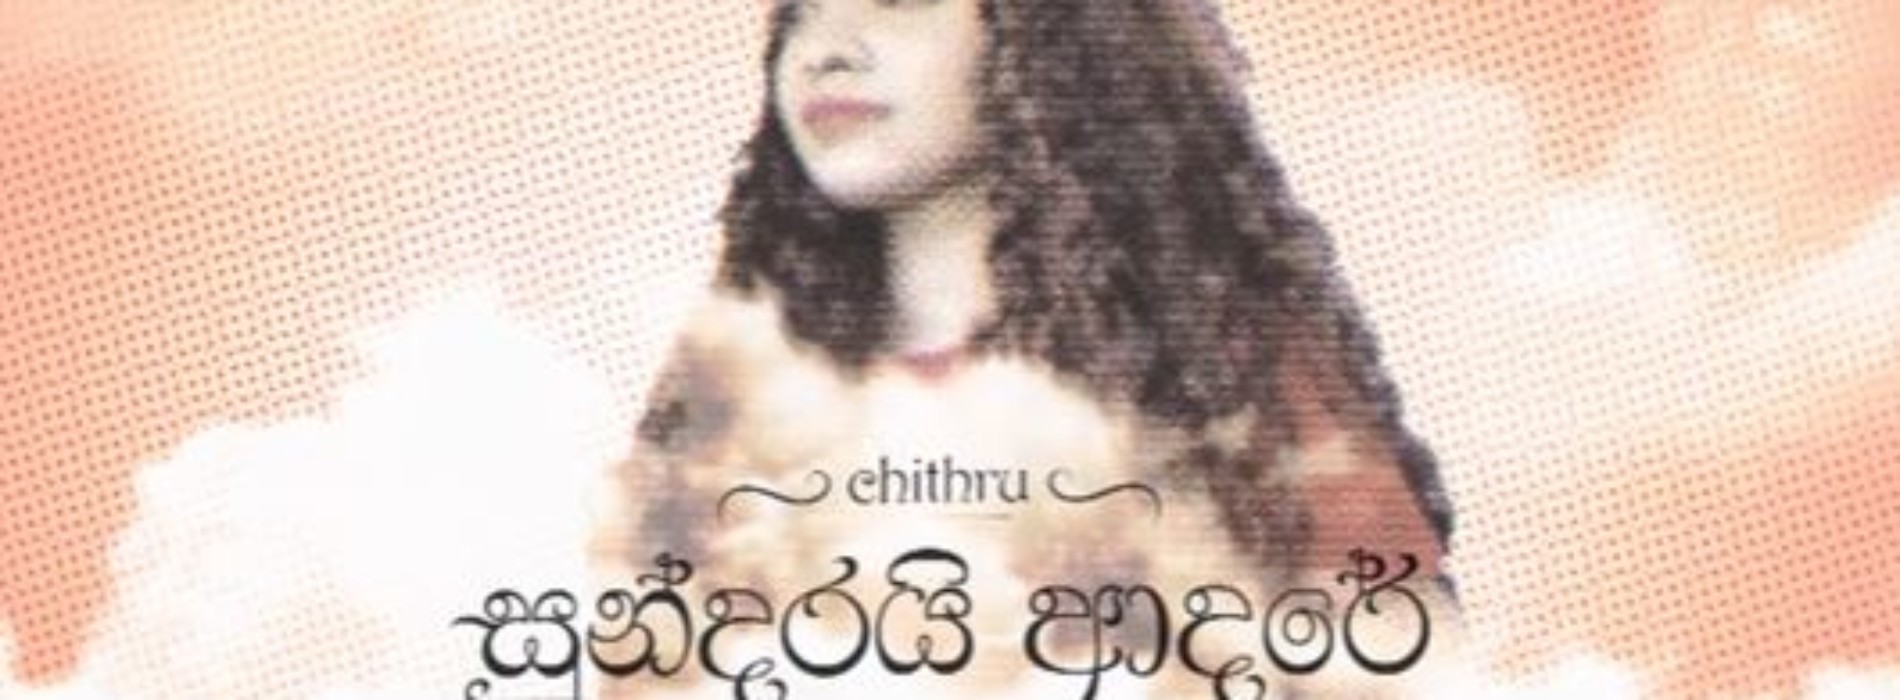 Chithru – Sundarai Adare (Official Audio)